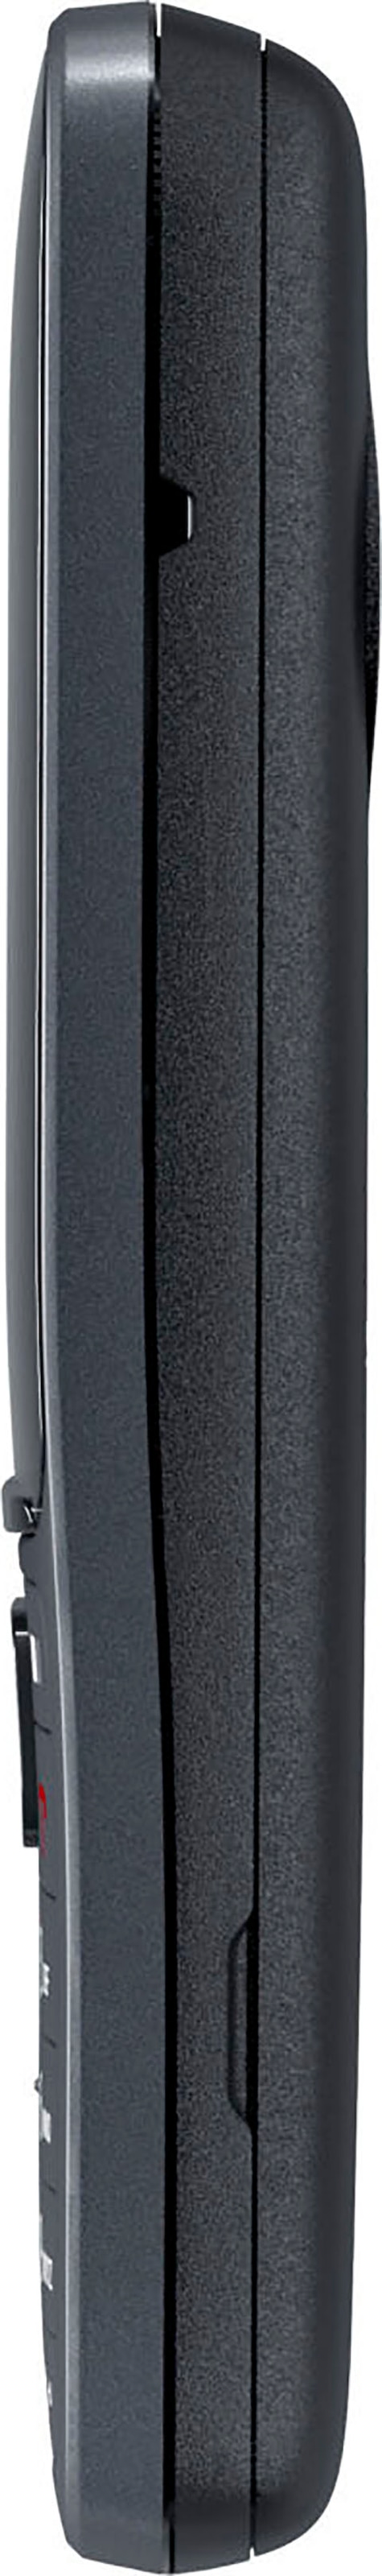 Telekom Festnetztelefon »DECT Handset D142«, BAUR elmeg (Bluetooth) 